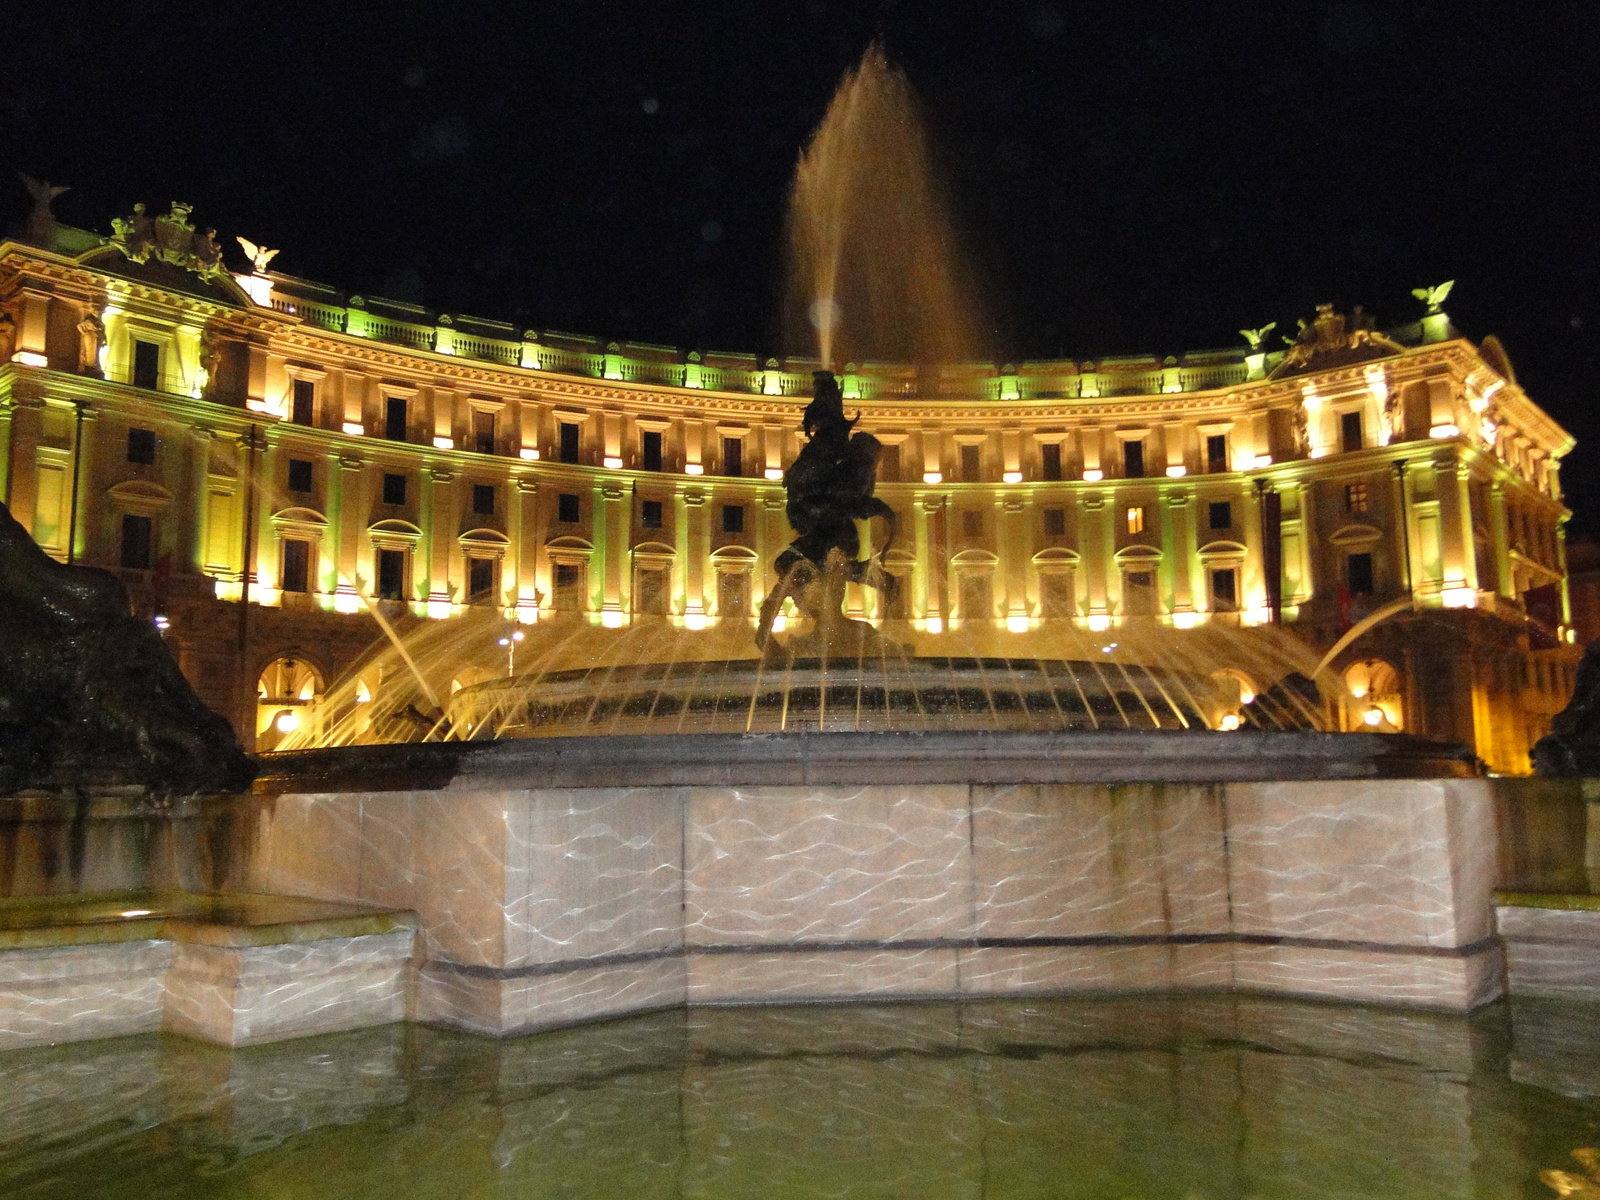 Róma by night, Piazza Republica